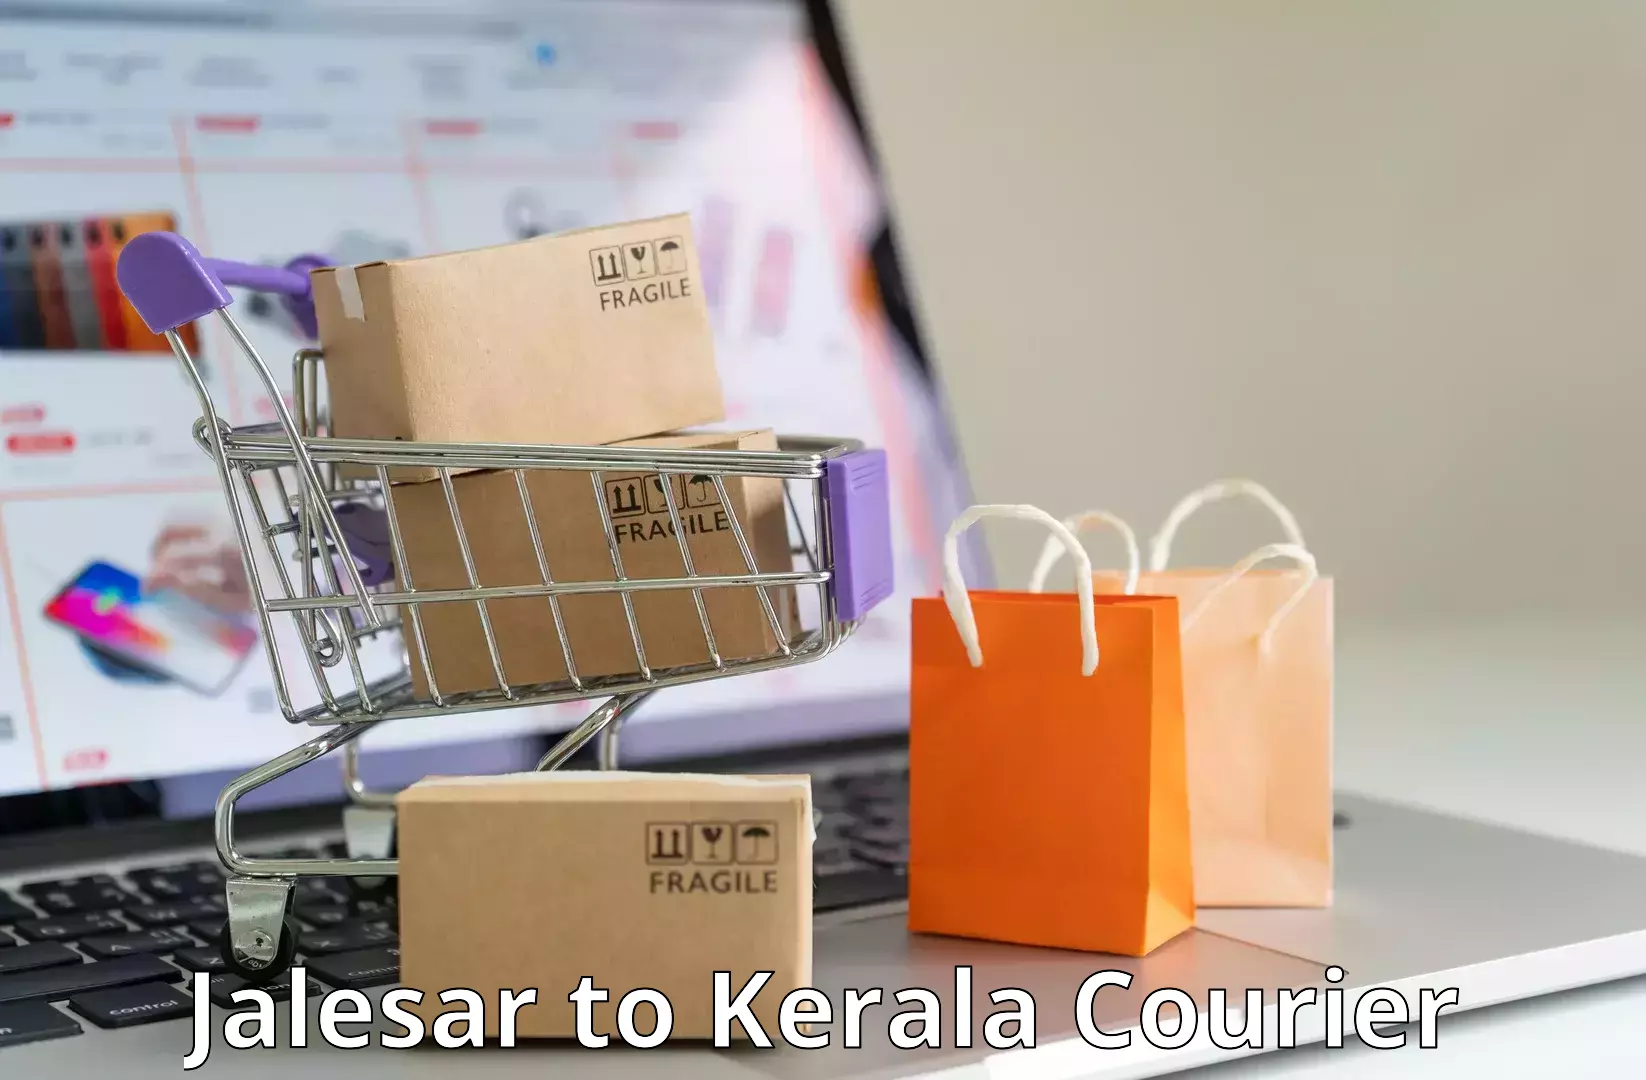 Next-generation courier services Jalesar to Kuchi